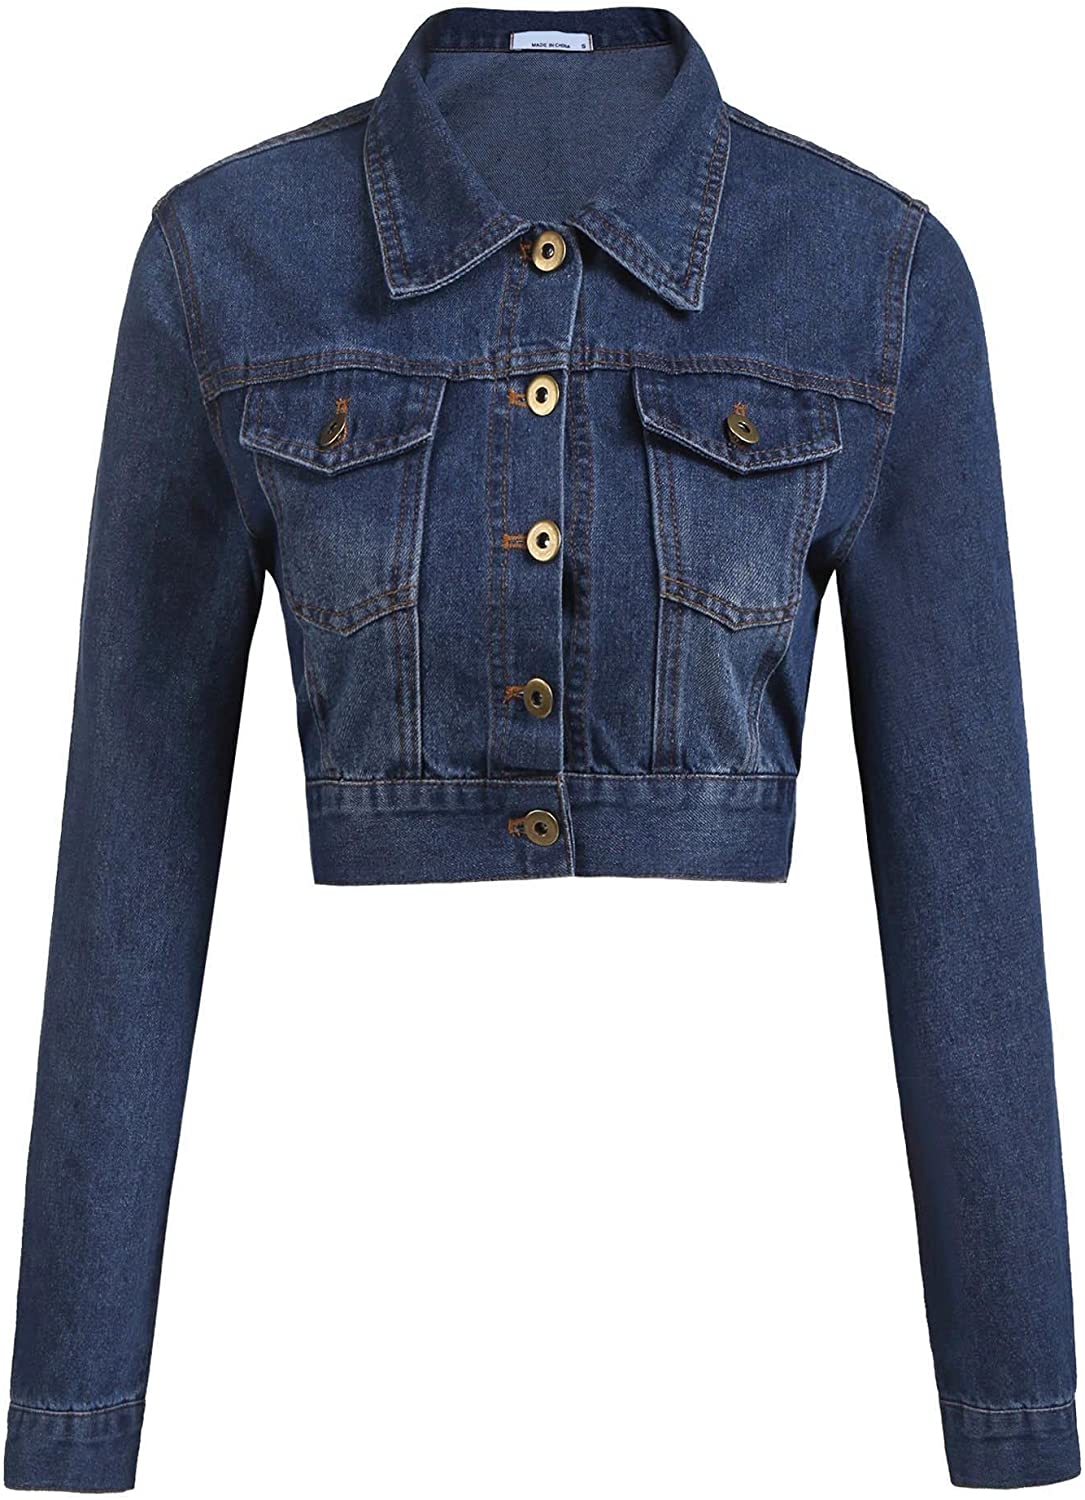 shelikes Womens Denim Blue Jacket Ladies Crop Style Button Up Vintage 8-16 